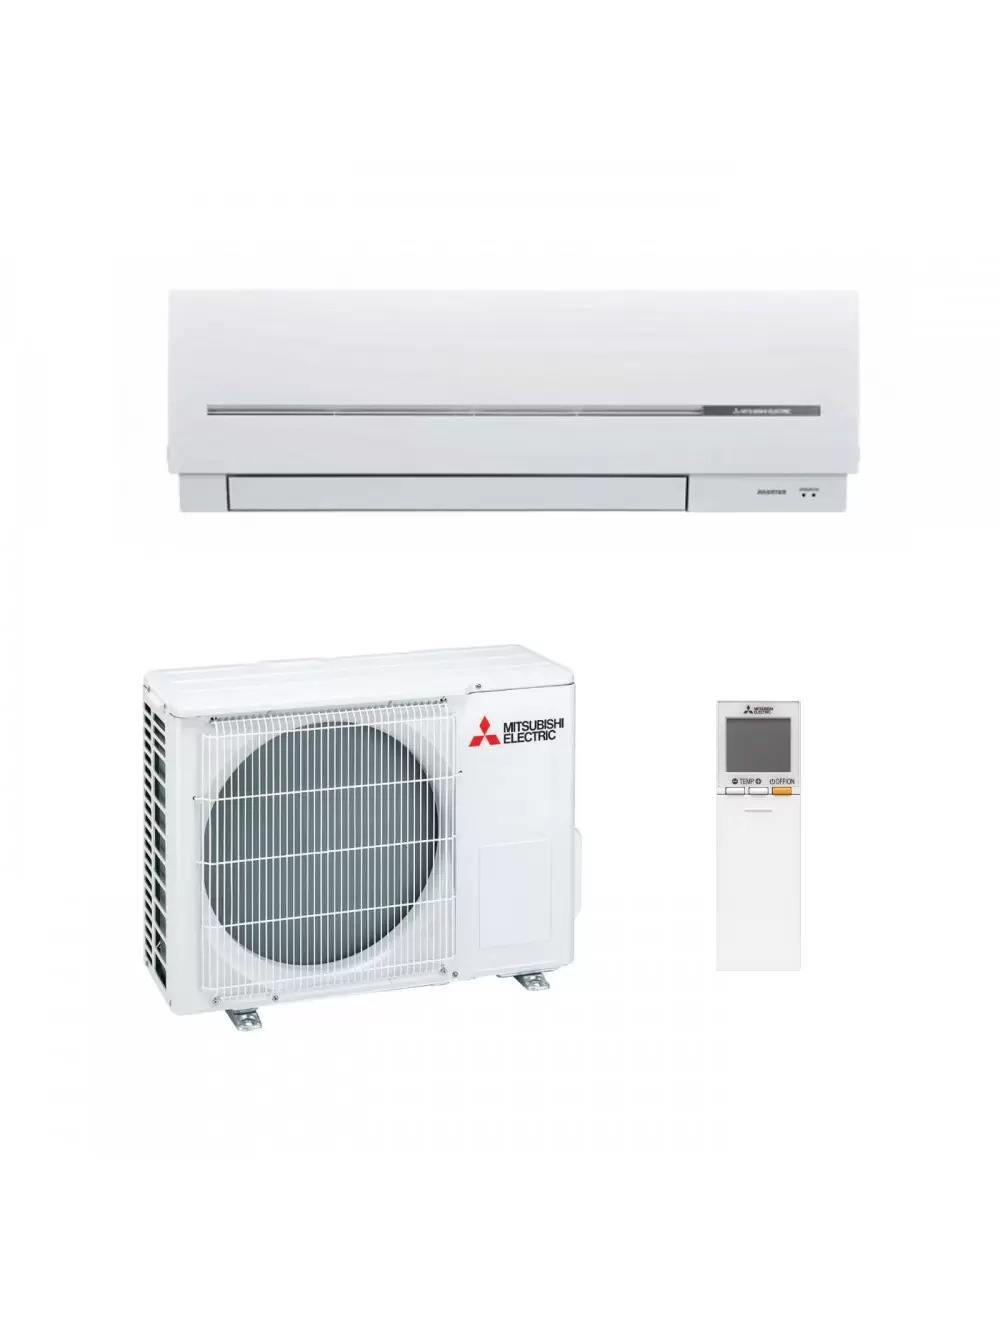 mitsubishi-electric-air-conditioning-msz-ap25vgk-wall-mounted-2.5kw-9000btu-inverter-heat-pump-r32-a-240v-50hz-9557-p_1_1